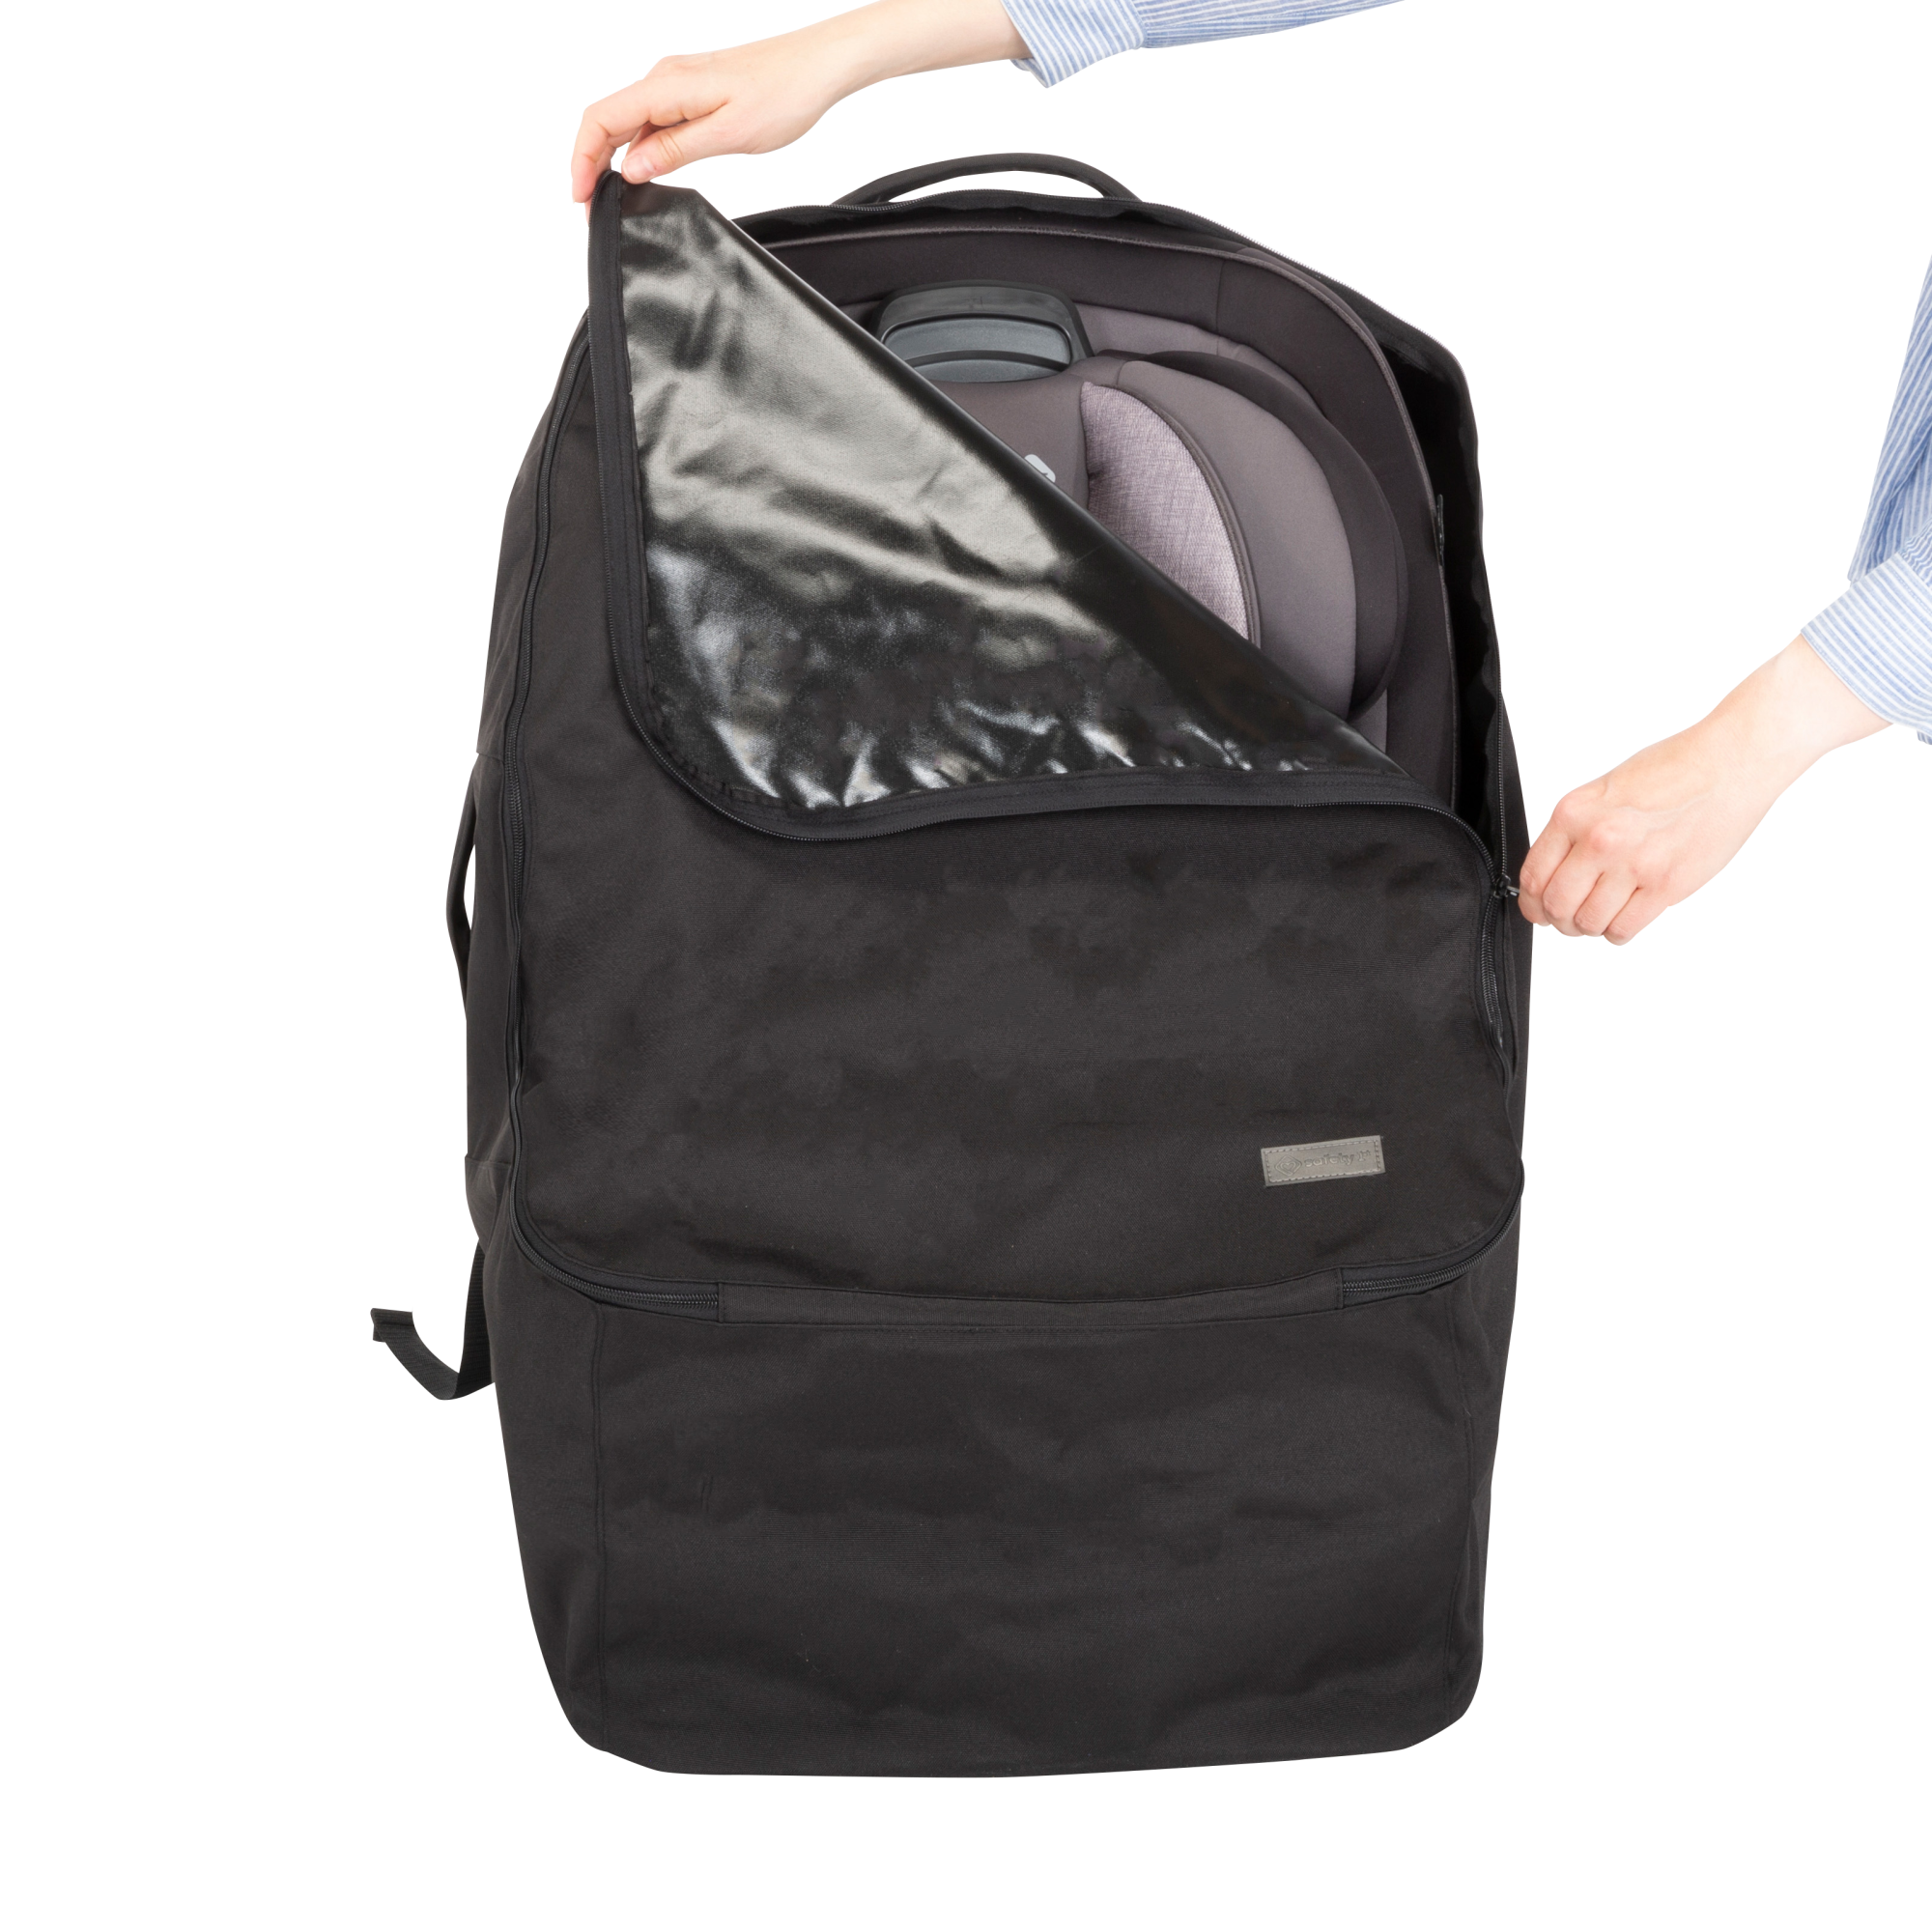 Travel Everywhere Car Seat Carry Bag - woman opening bag revealing car seat inside